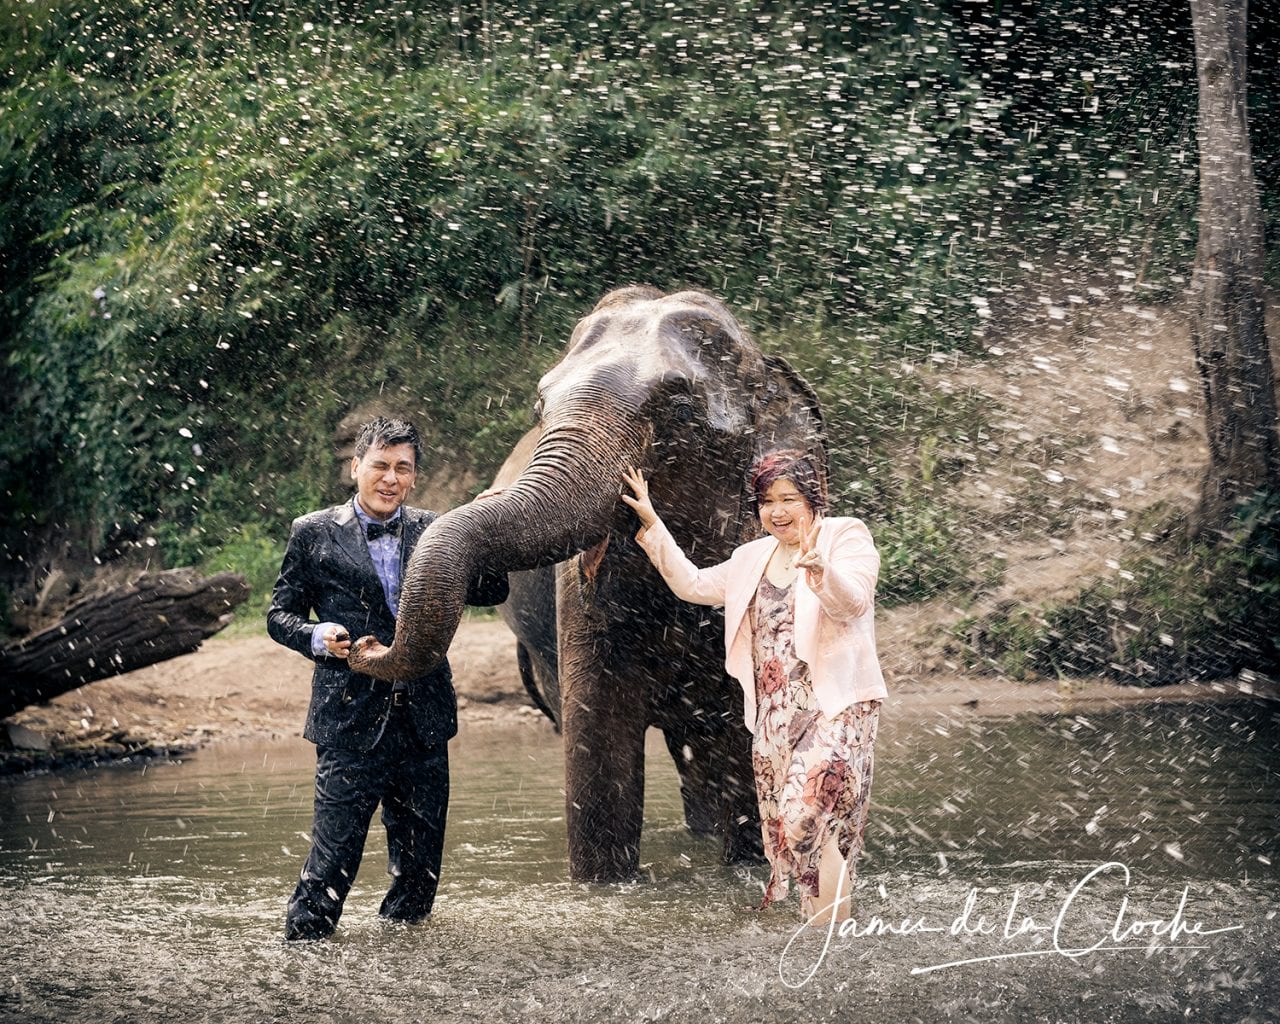 Elephant Wedding Portrait